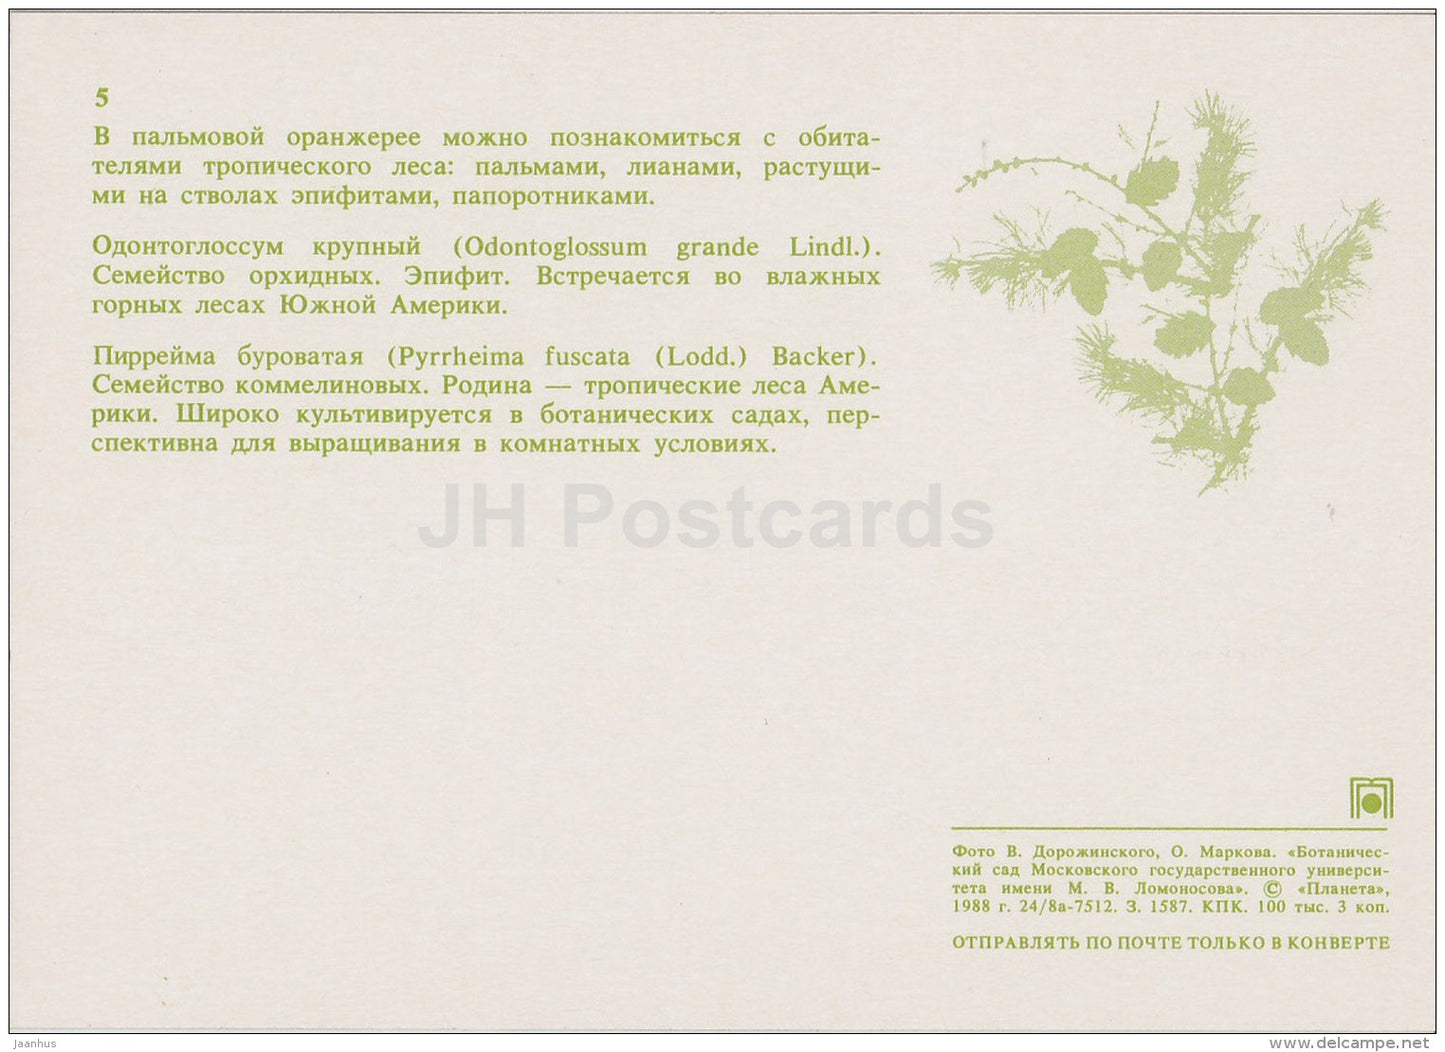 Odontoglossum grande , orchid - Pyrrheima fuscata - Moscow Botanical Garden - 1988 - Russia USSR - unused - JH Postcards